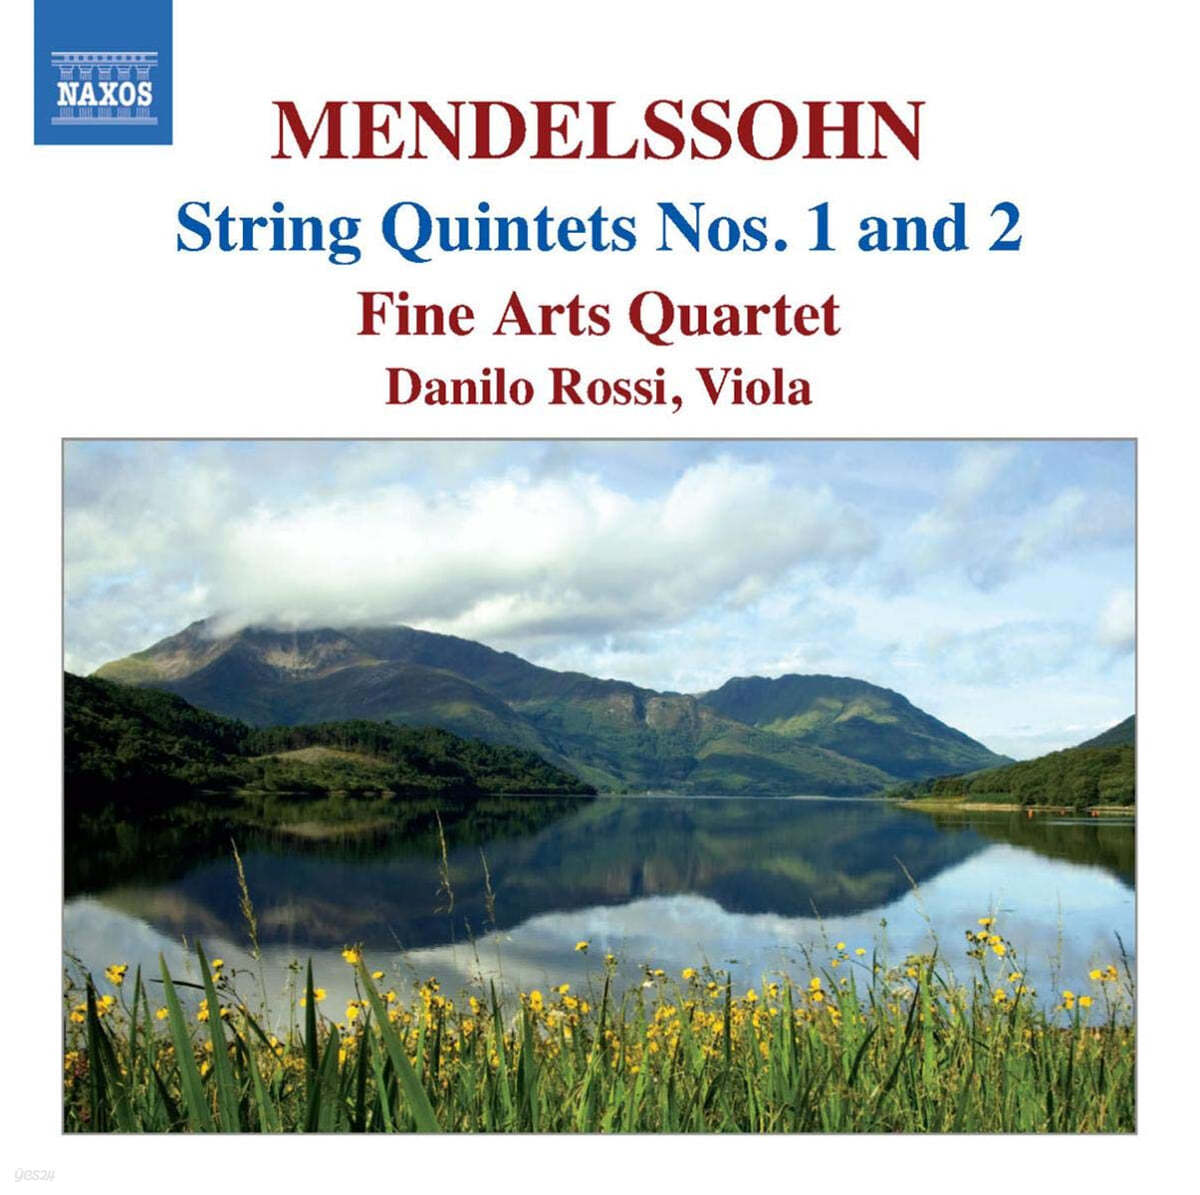 Danilo Rossi 멘델스존: 현악오중주 1, 2번 (Mendelssohn: String Quintets Nos. 1, 2) 